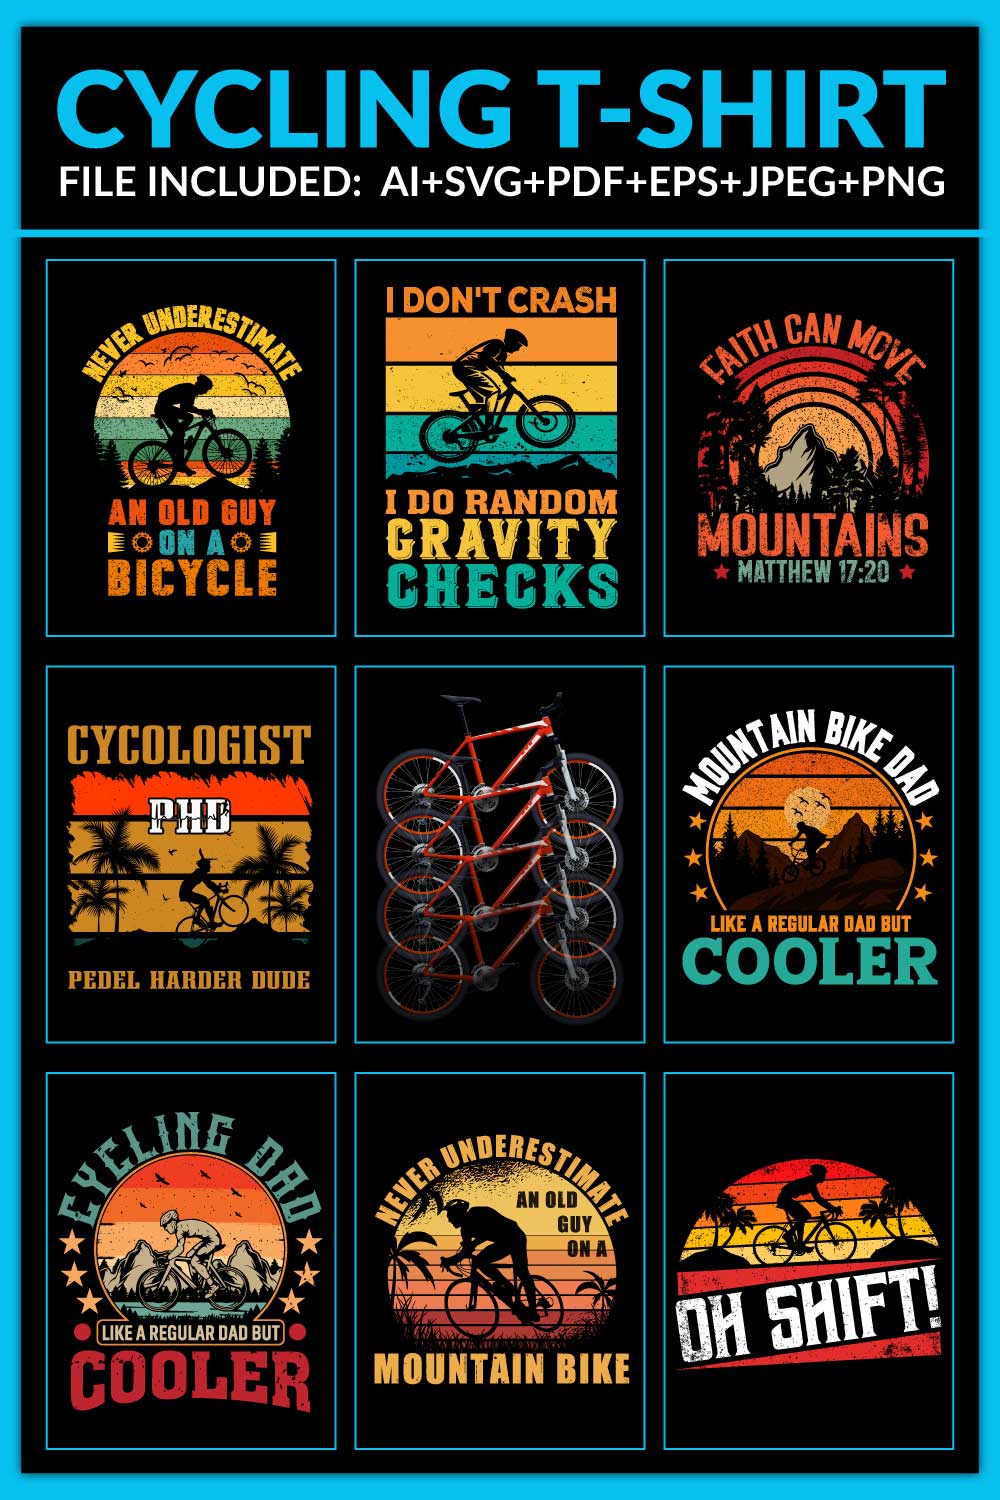 Cycling T-Shirt Design pinterest image.